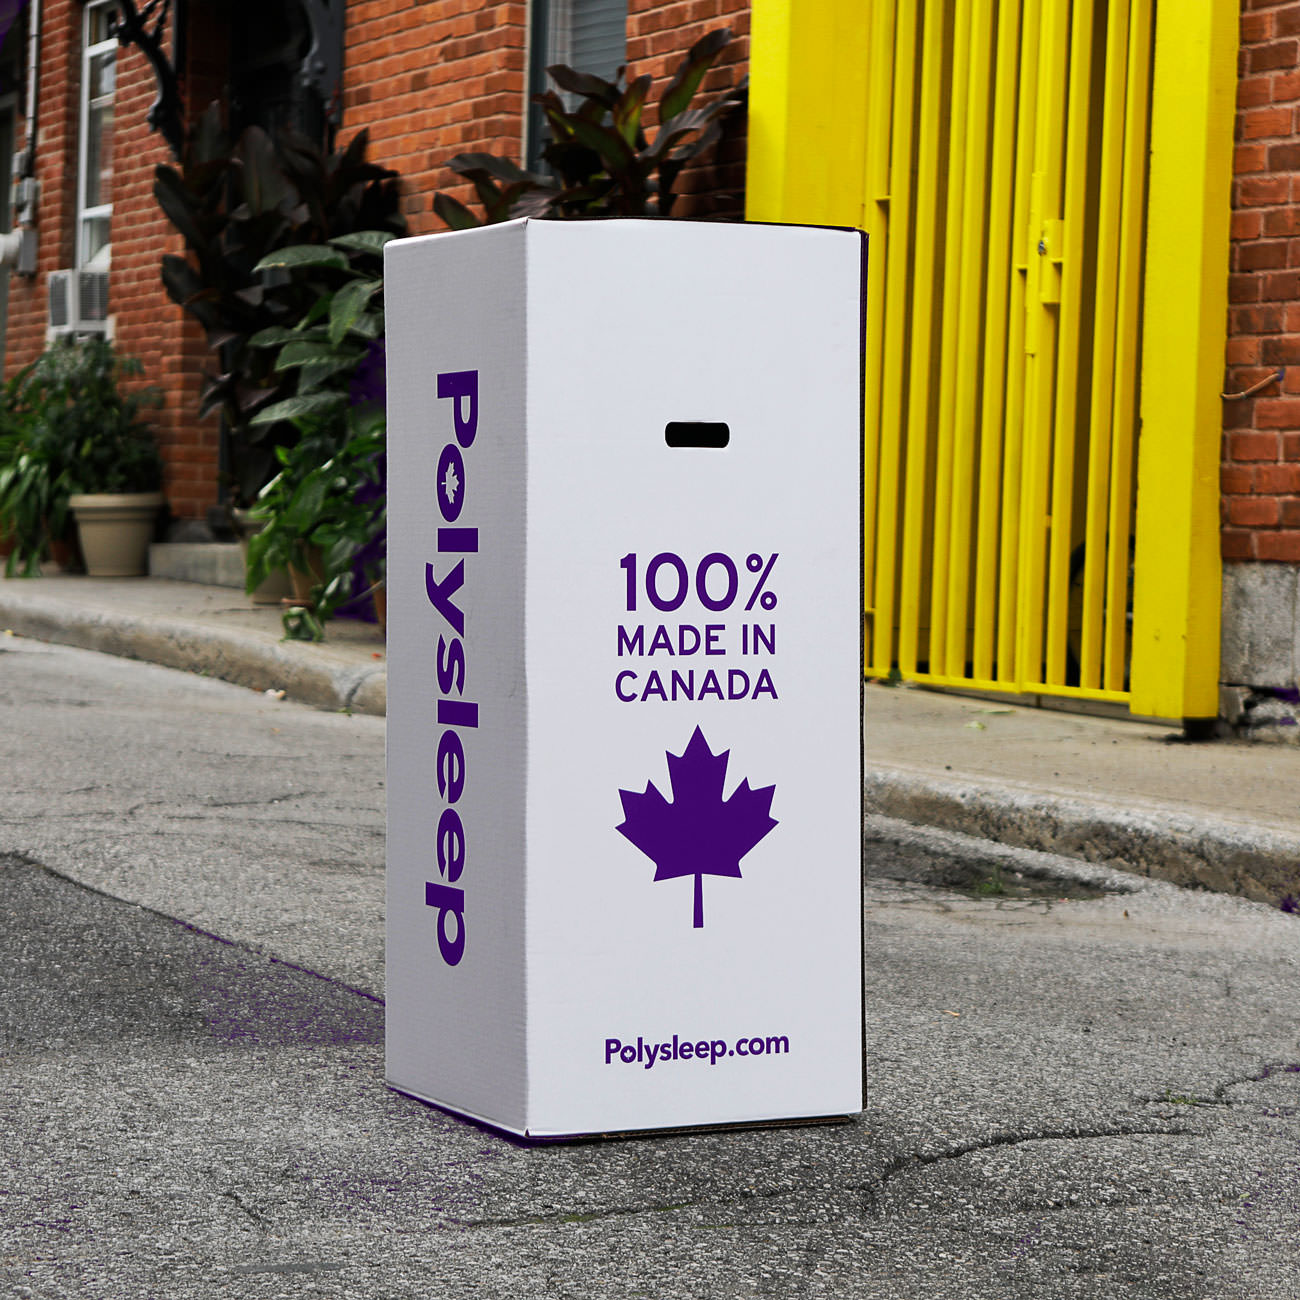 Polysleep 100% made in Canada